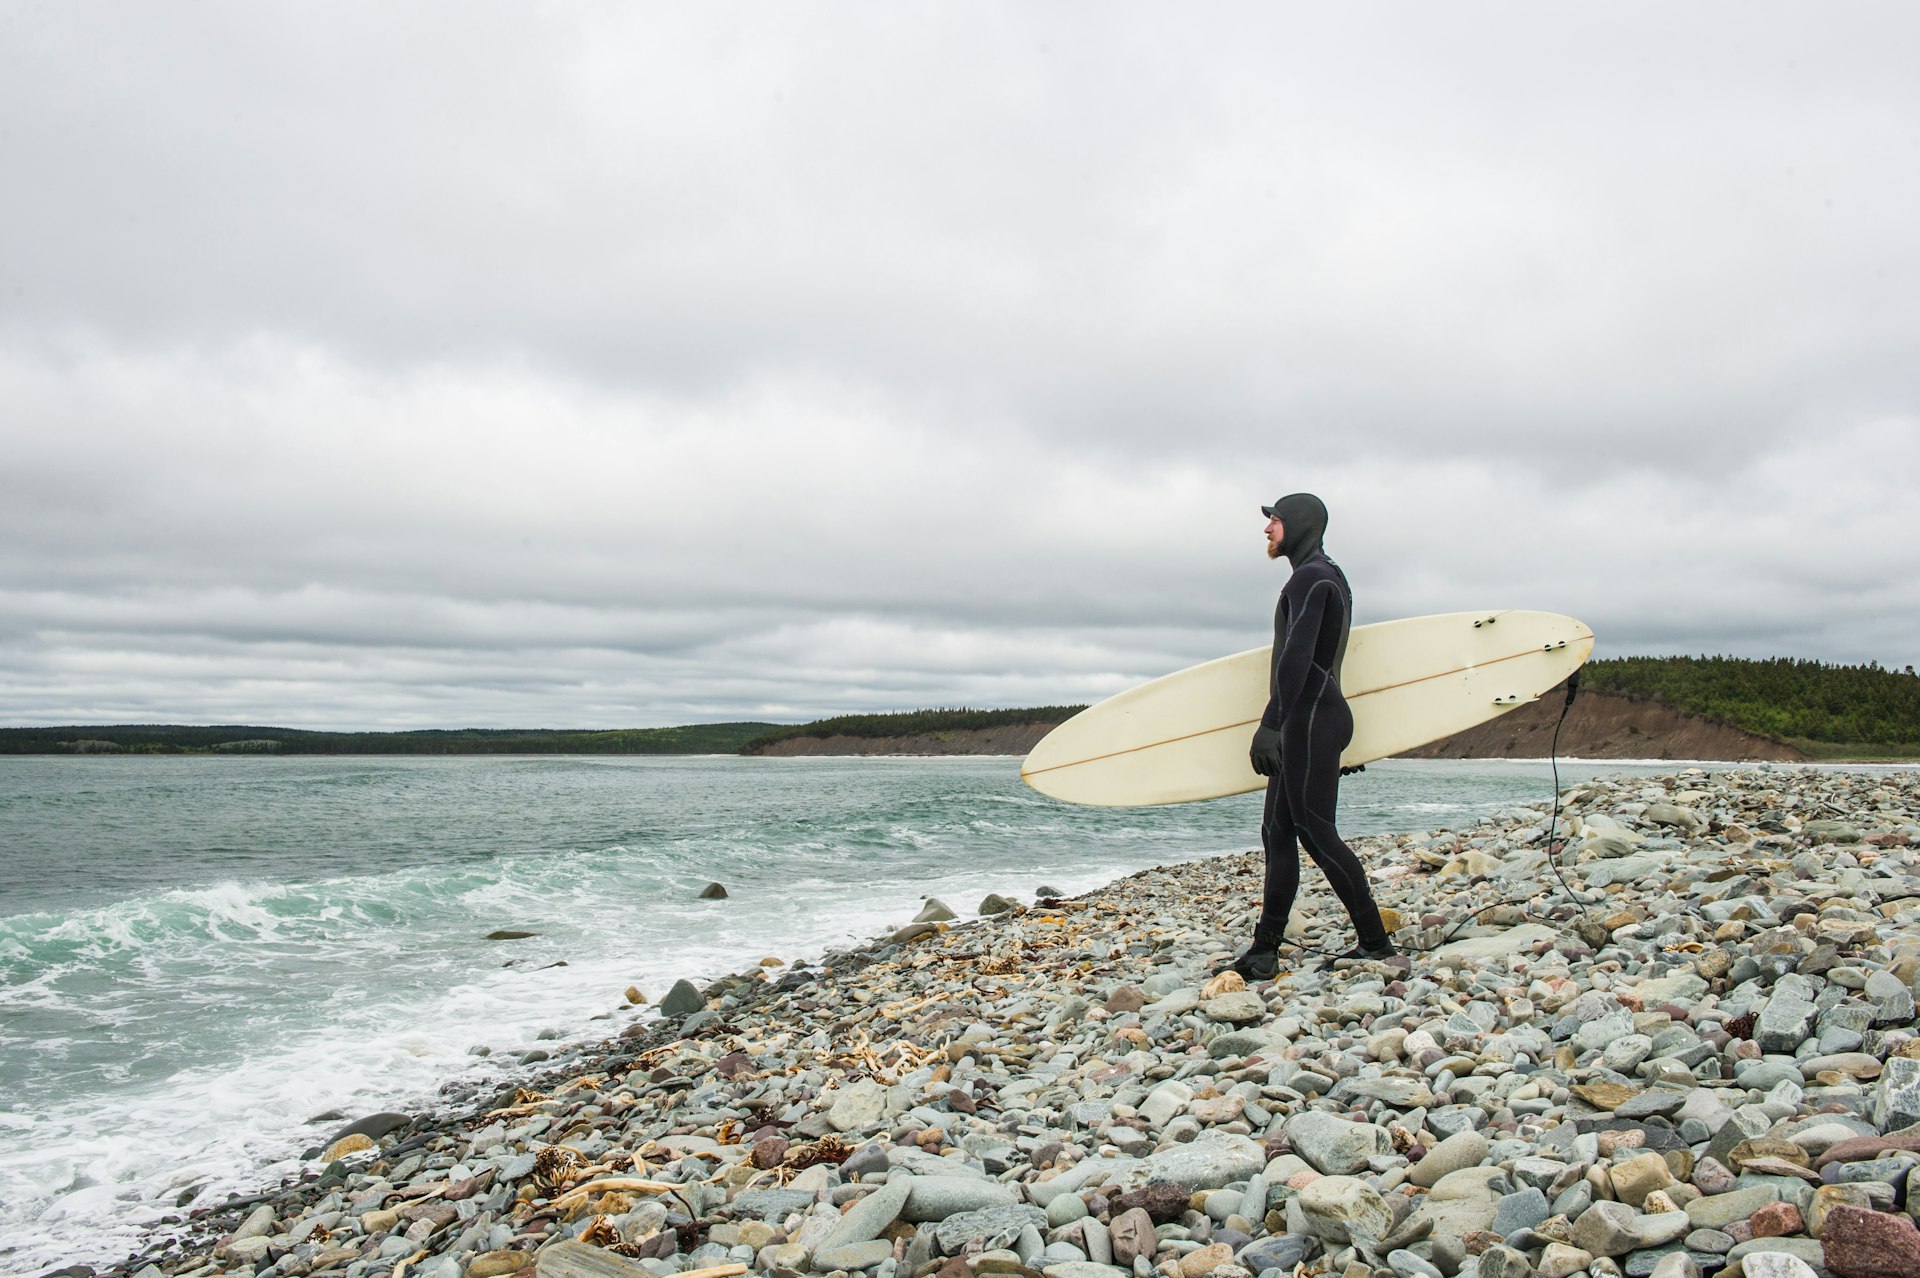 Surfing in Nova Scotia